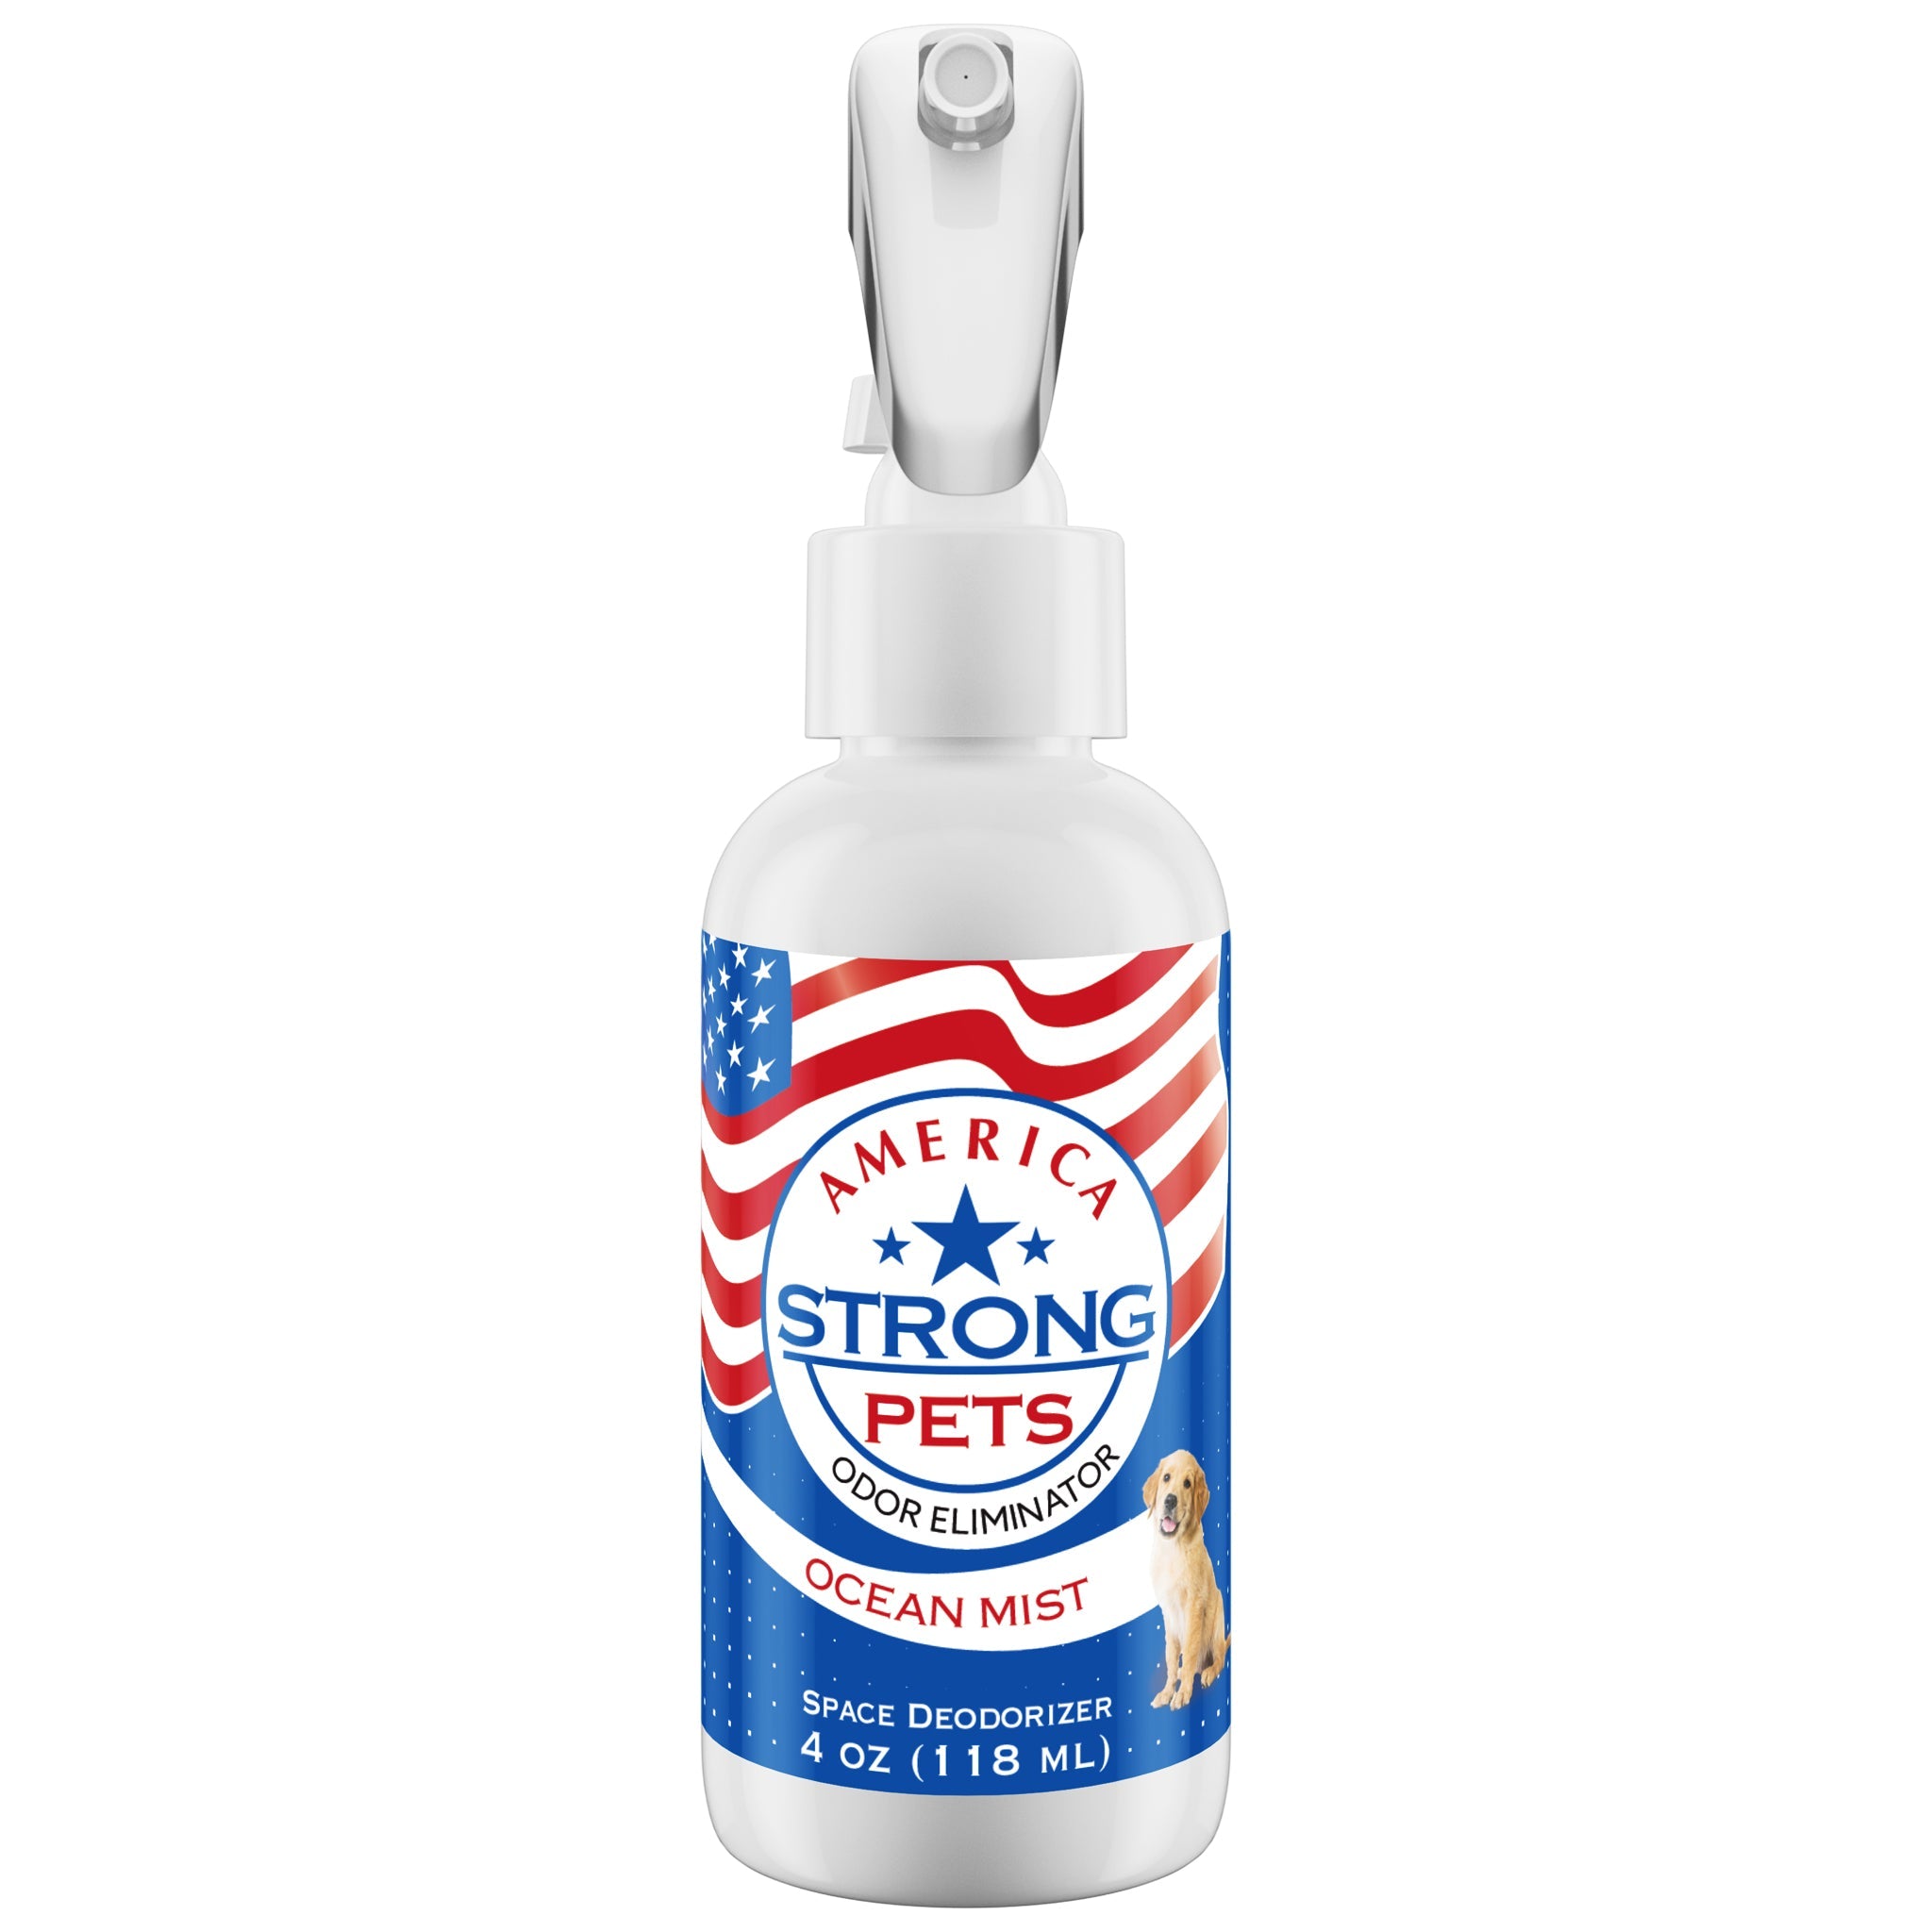 America Strong Pet Odor Eliminator - Ocean Mist Scent Size: 4 fl oz